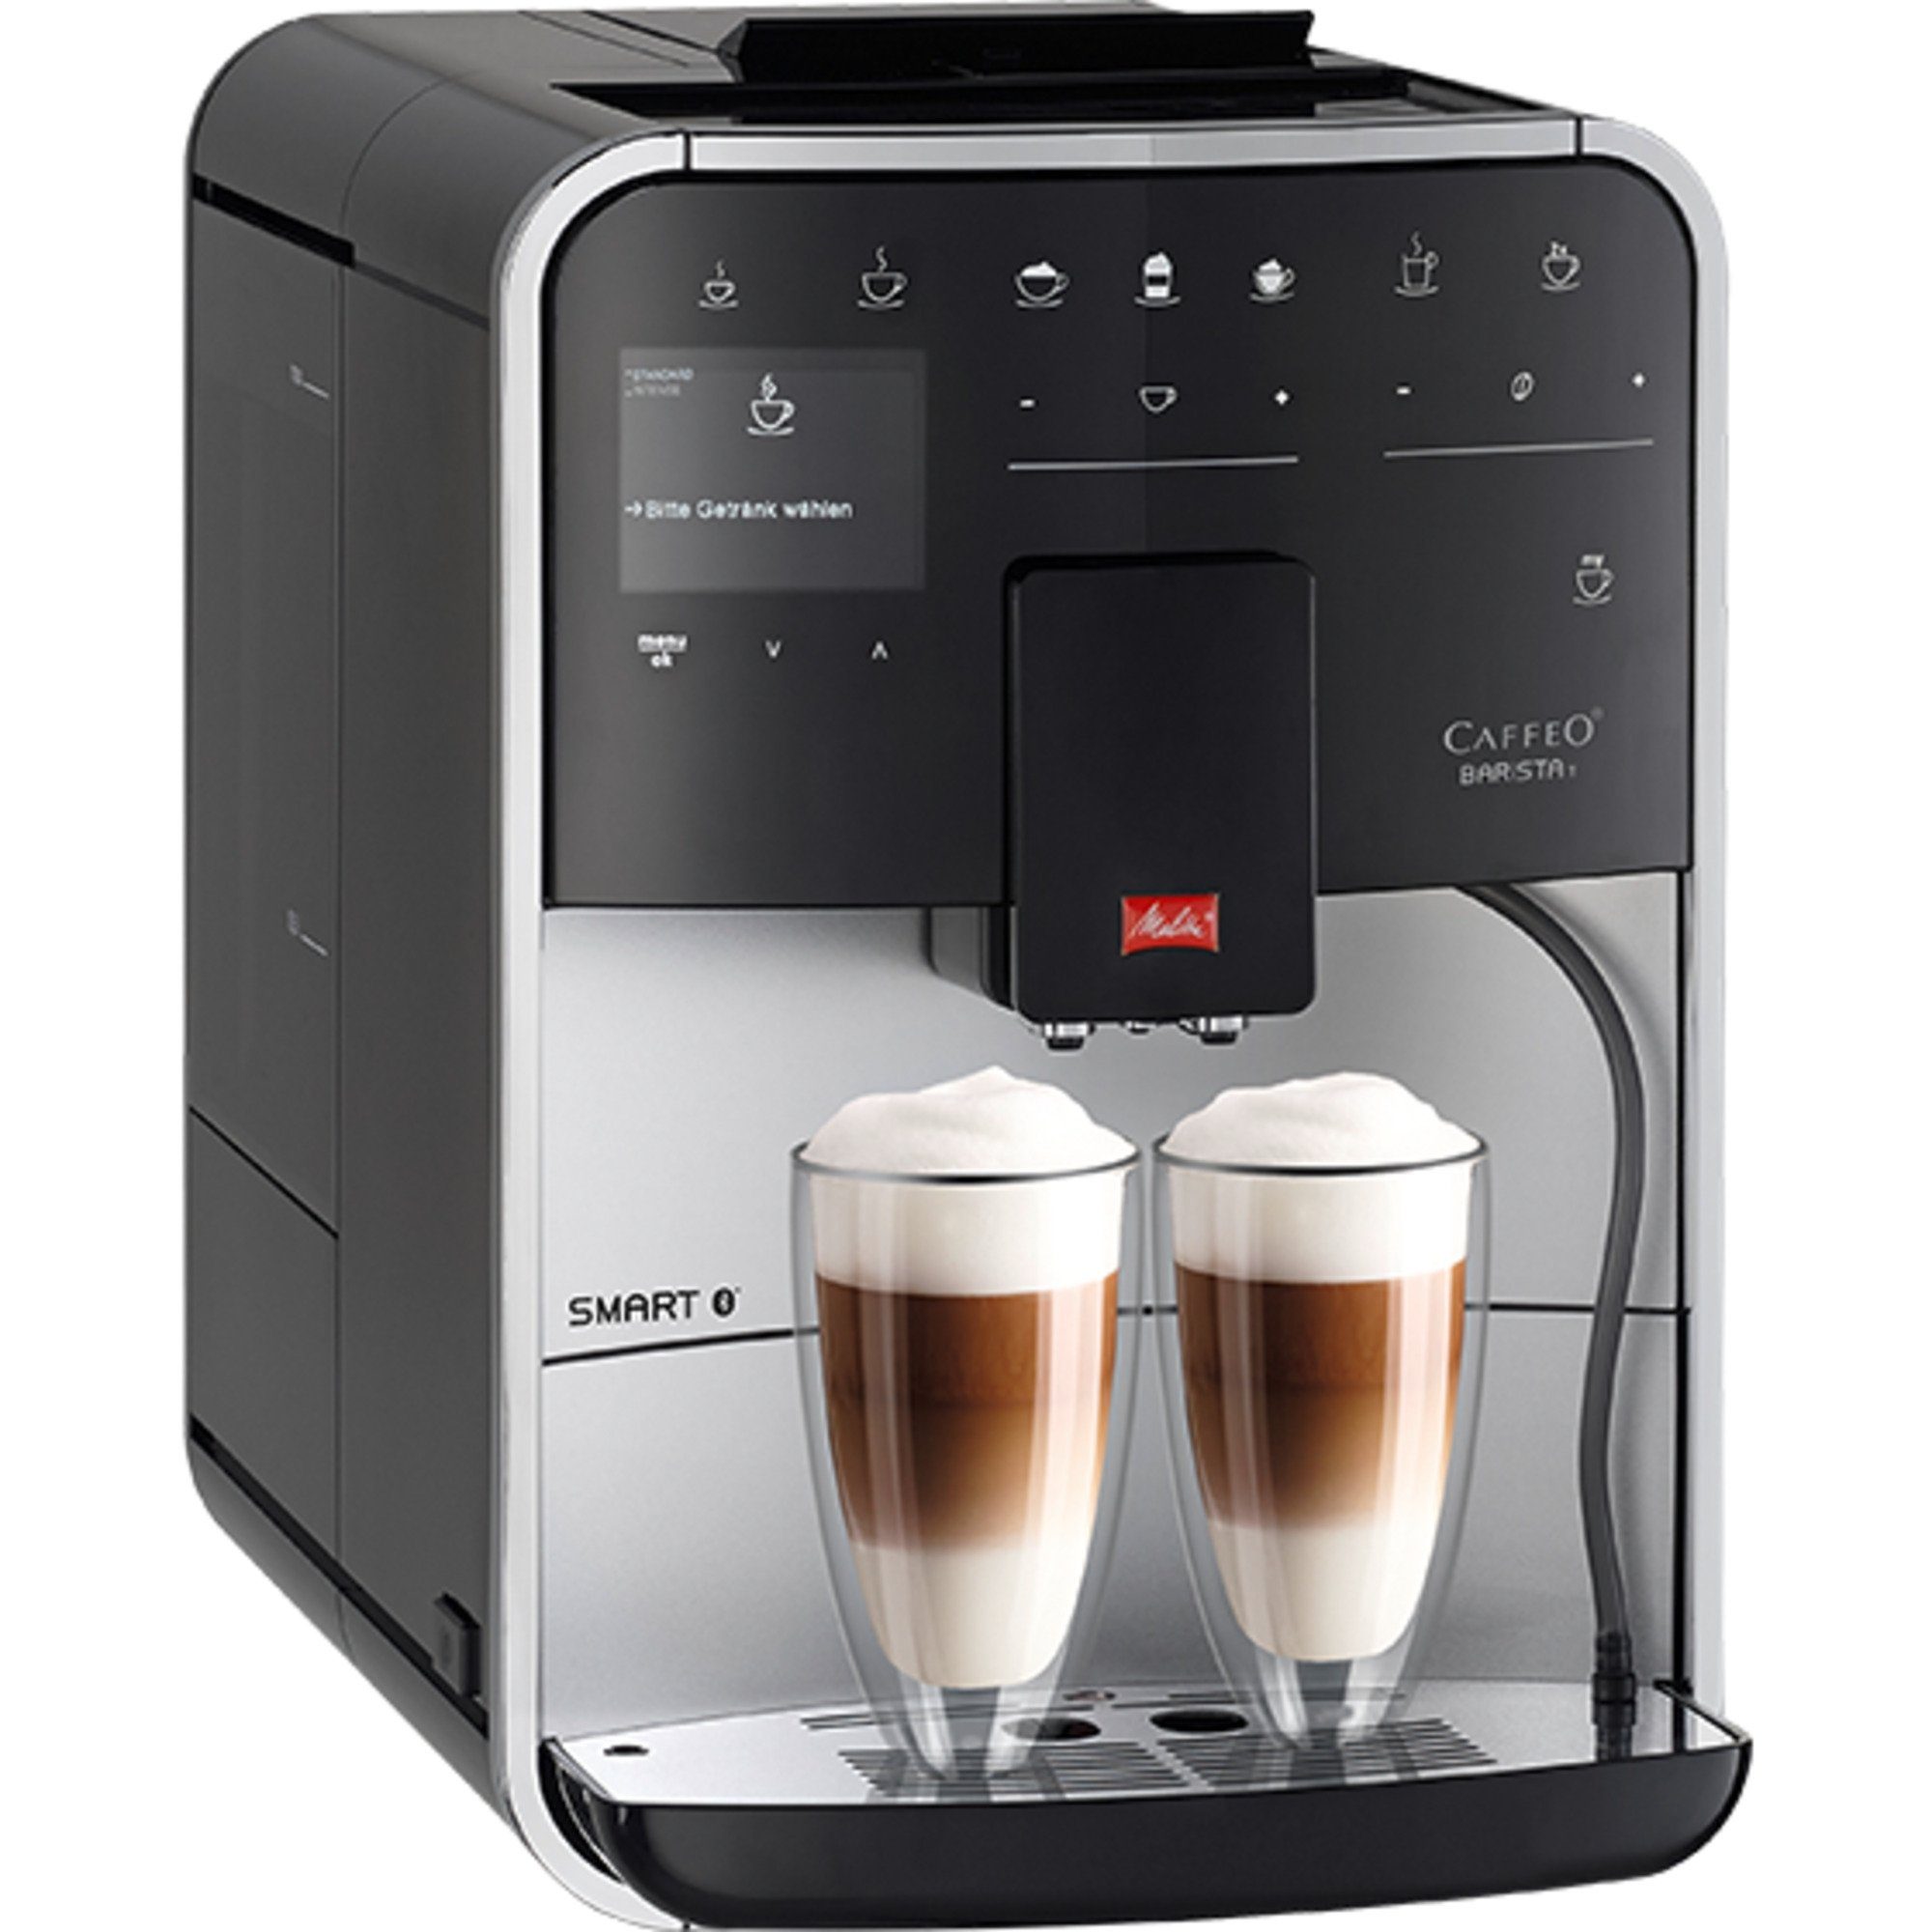 Silberfarben Kaffeemaschine Melitta W T Elektrische Barista Smart 1450 Melitta Kaffeevollautomat